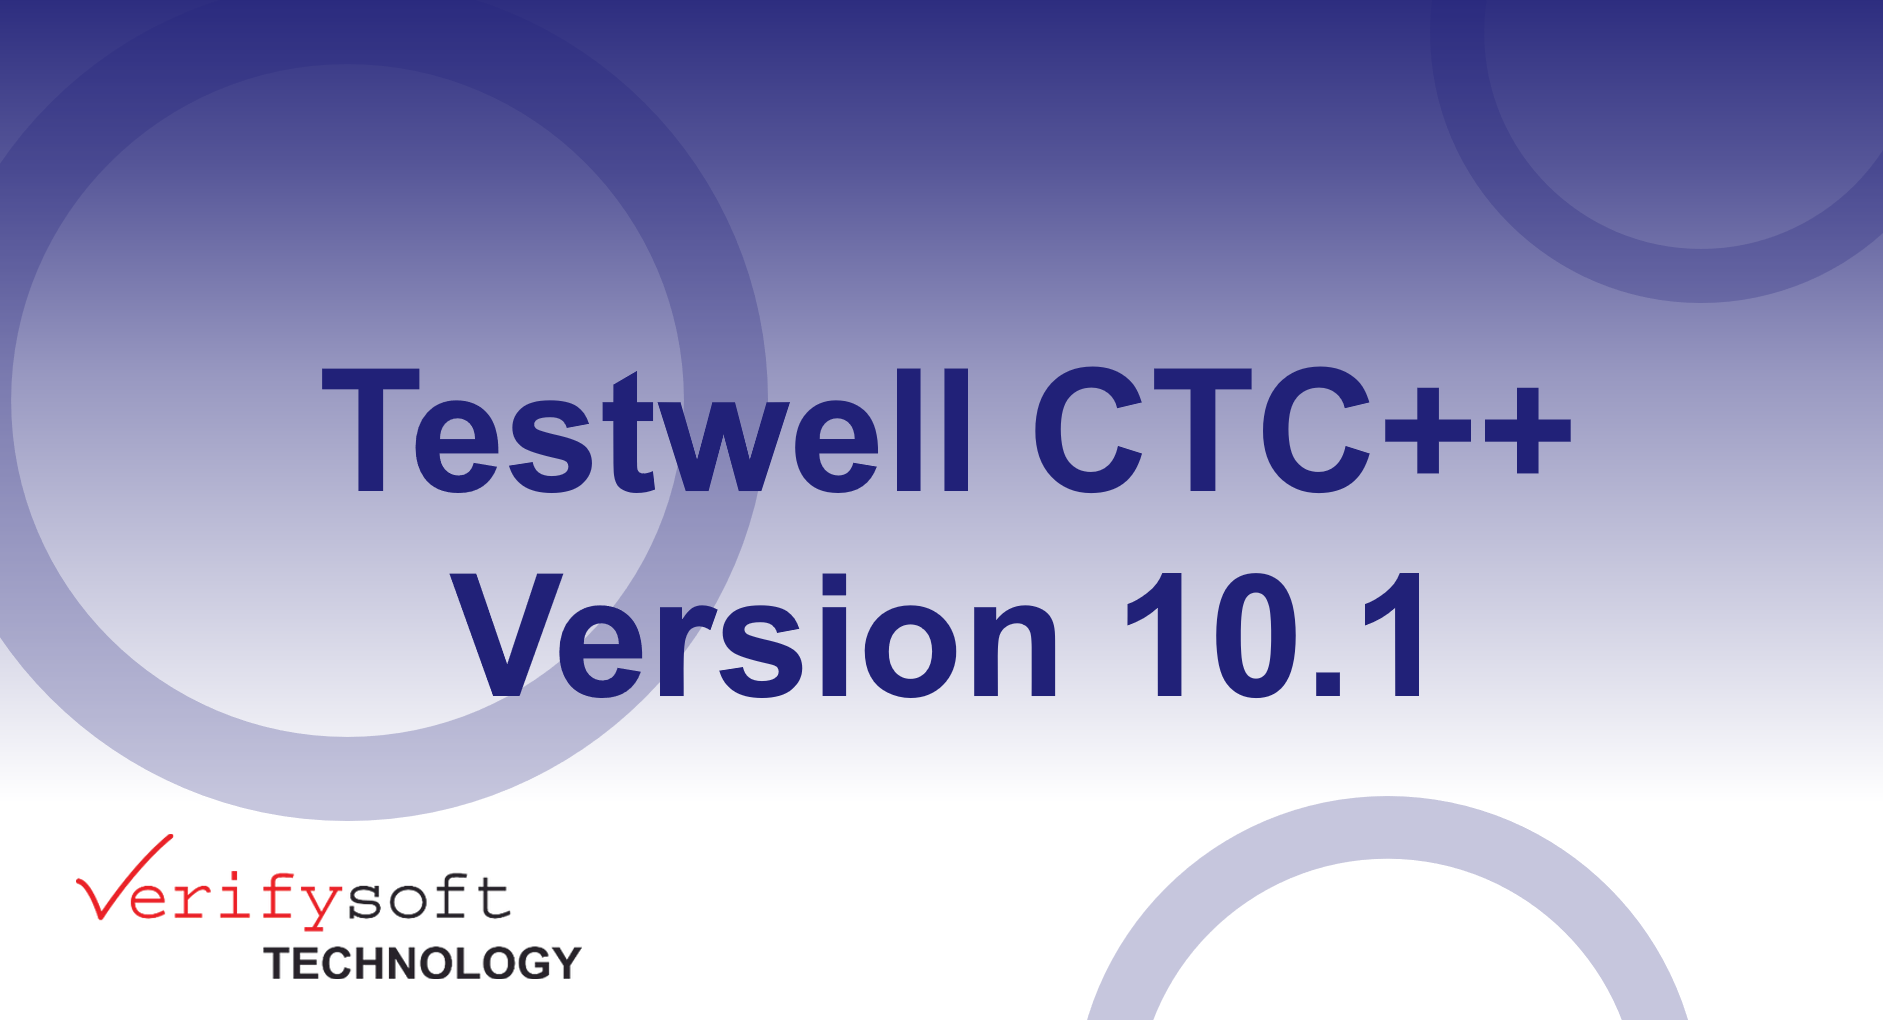 Testwell CTC++ version 10.1